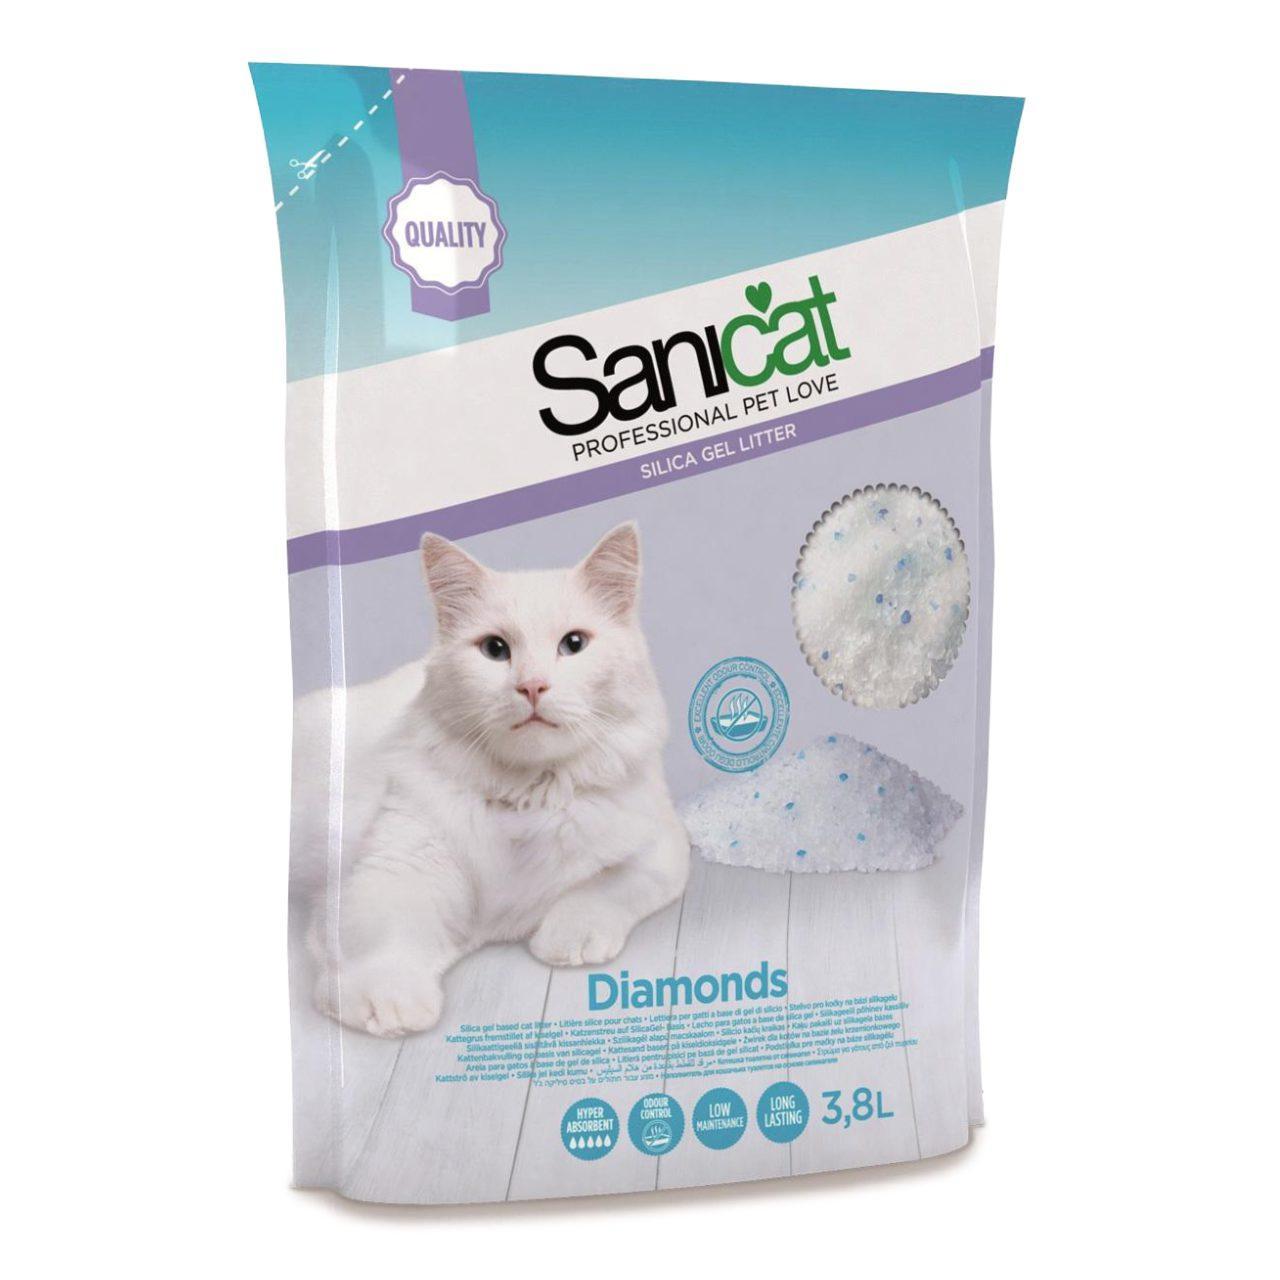 An image of Sanicat Professional Diamonds Non-Clumping Cat Litter